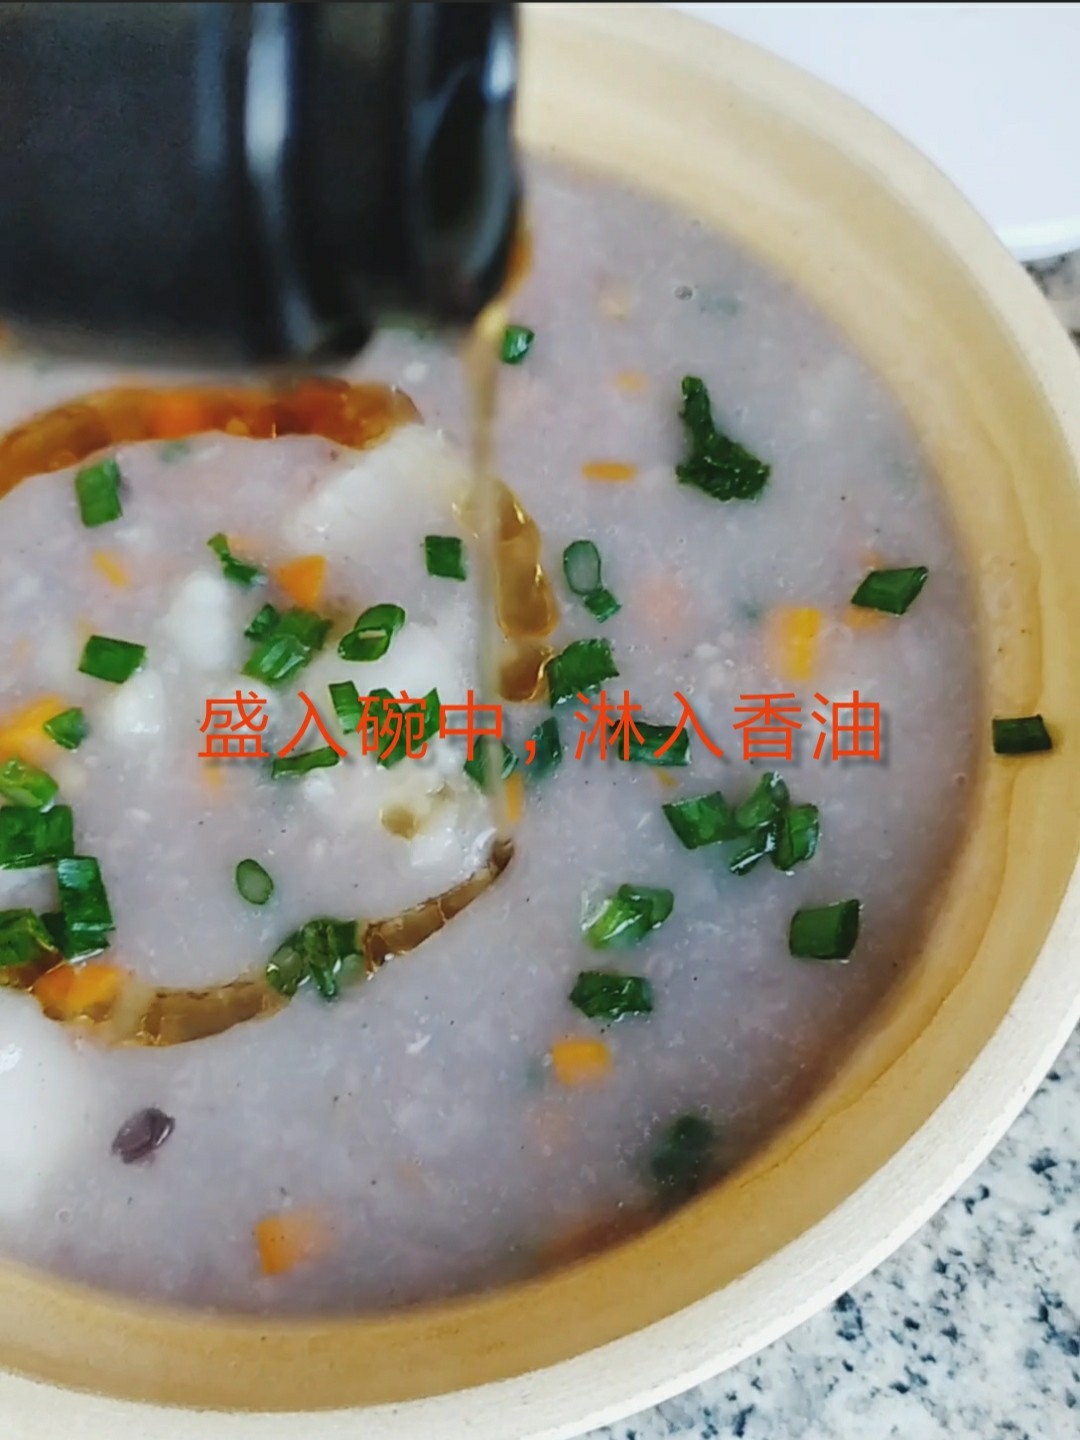 Nourishing and Warming Stomach Porridge: Raw Fish Slices and Five Grain Porridge recipe